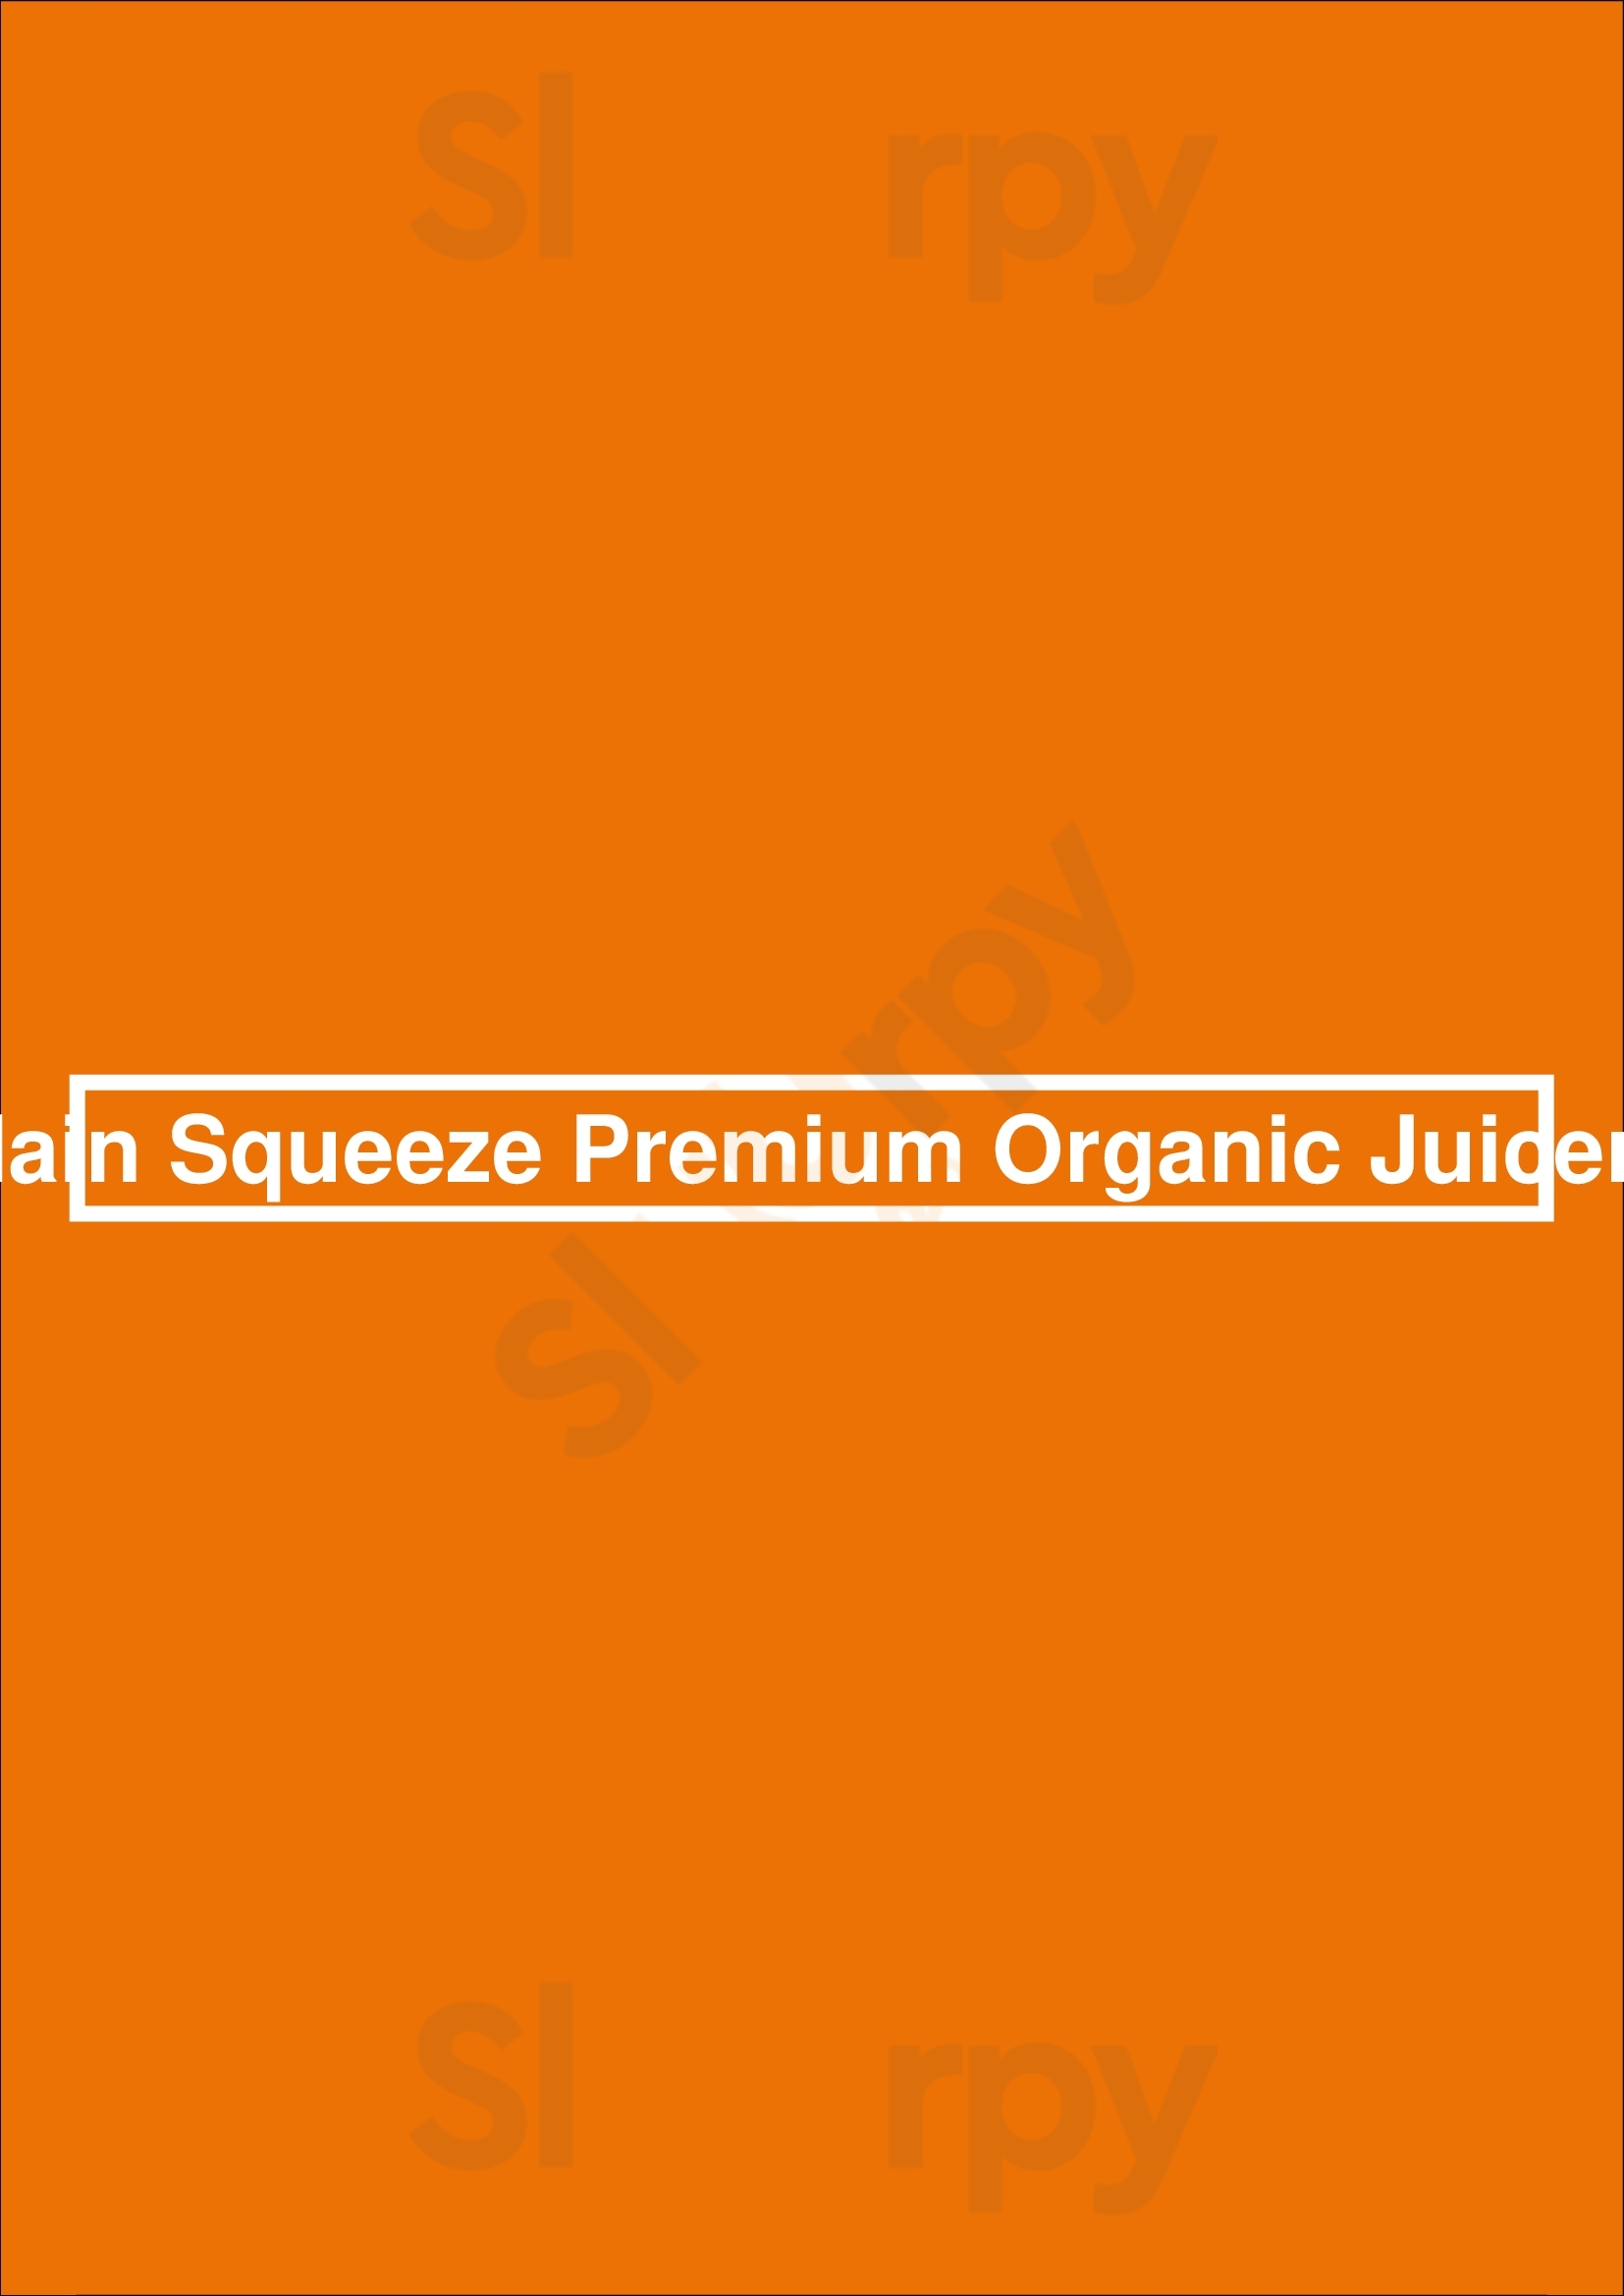 Main Squeeze Premium Organic Juicery Oakland Menu - 1